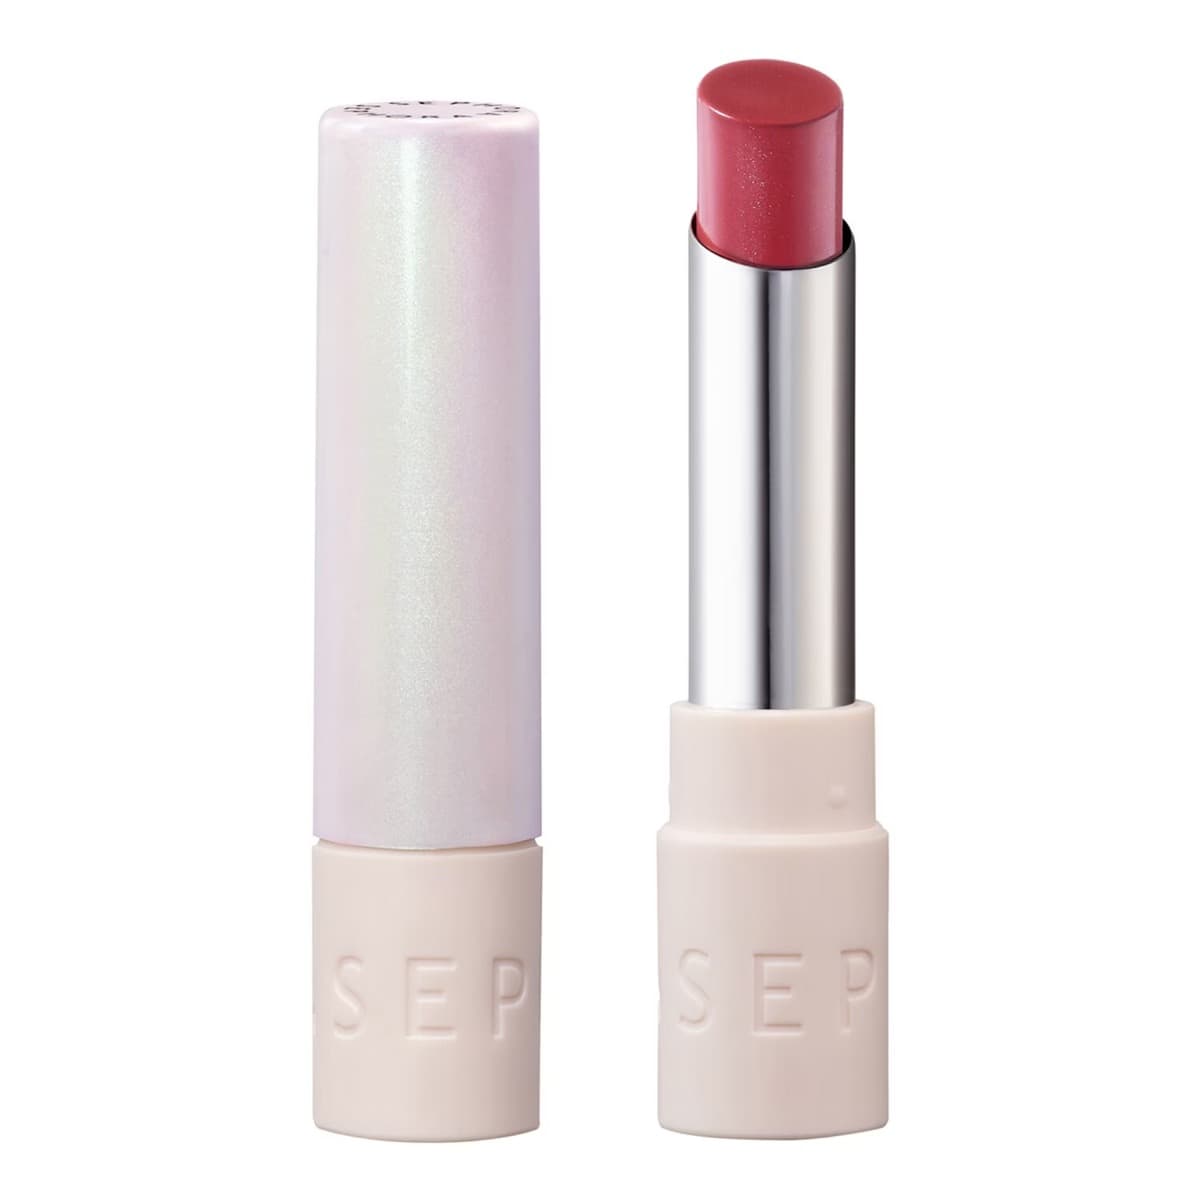 Sephora All About Shine Lipstick